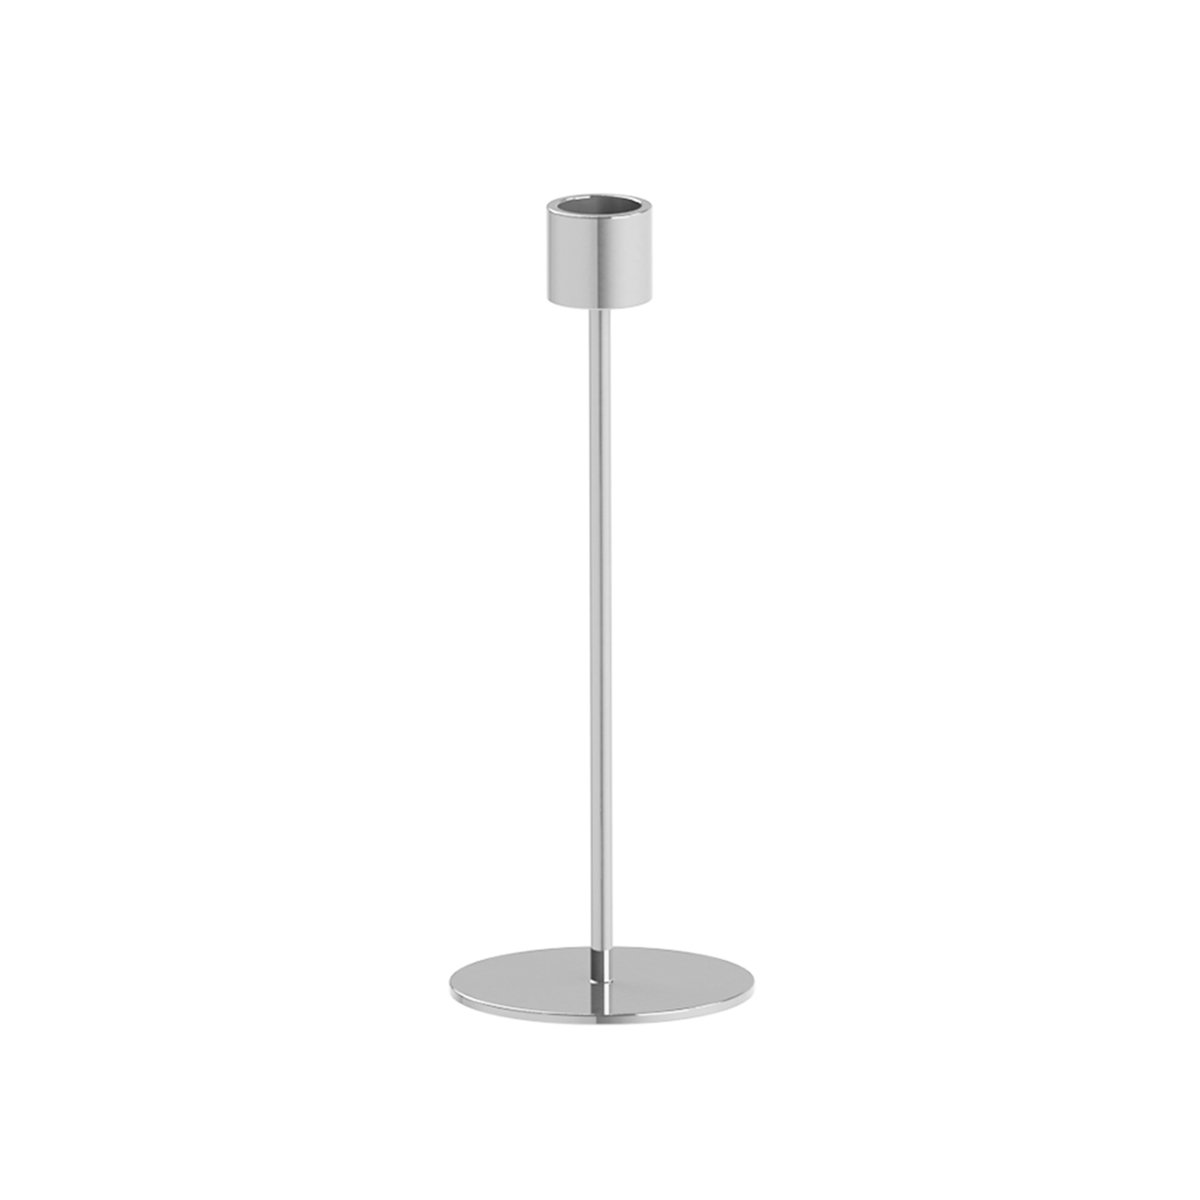 Cooee Design Cooee kynttilänjalka 21 cm stainless steel